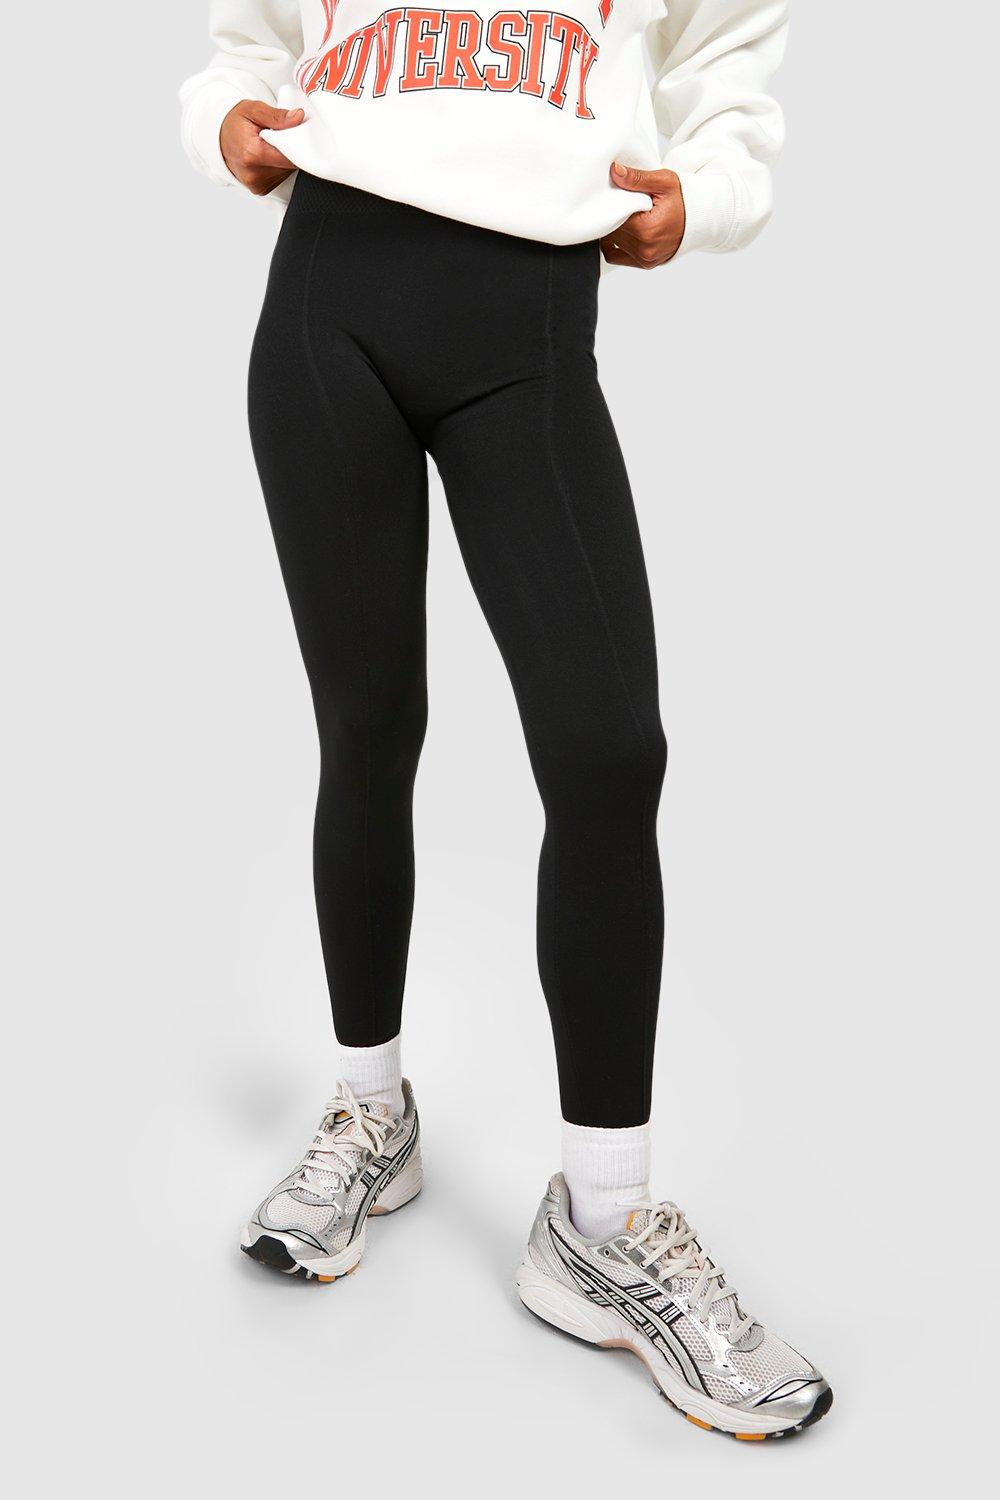 https://media.boohoo.com/i/boohoo/gzz70956_black_xl_3/female-black-thick-waistband-fleece-lined-seam-front-leggings